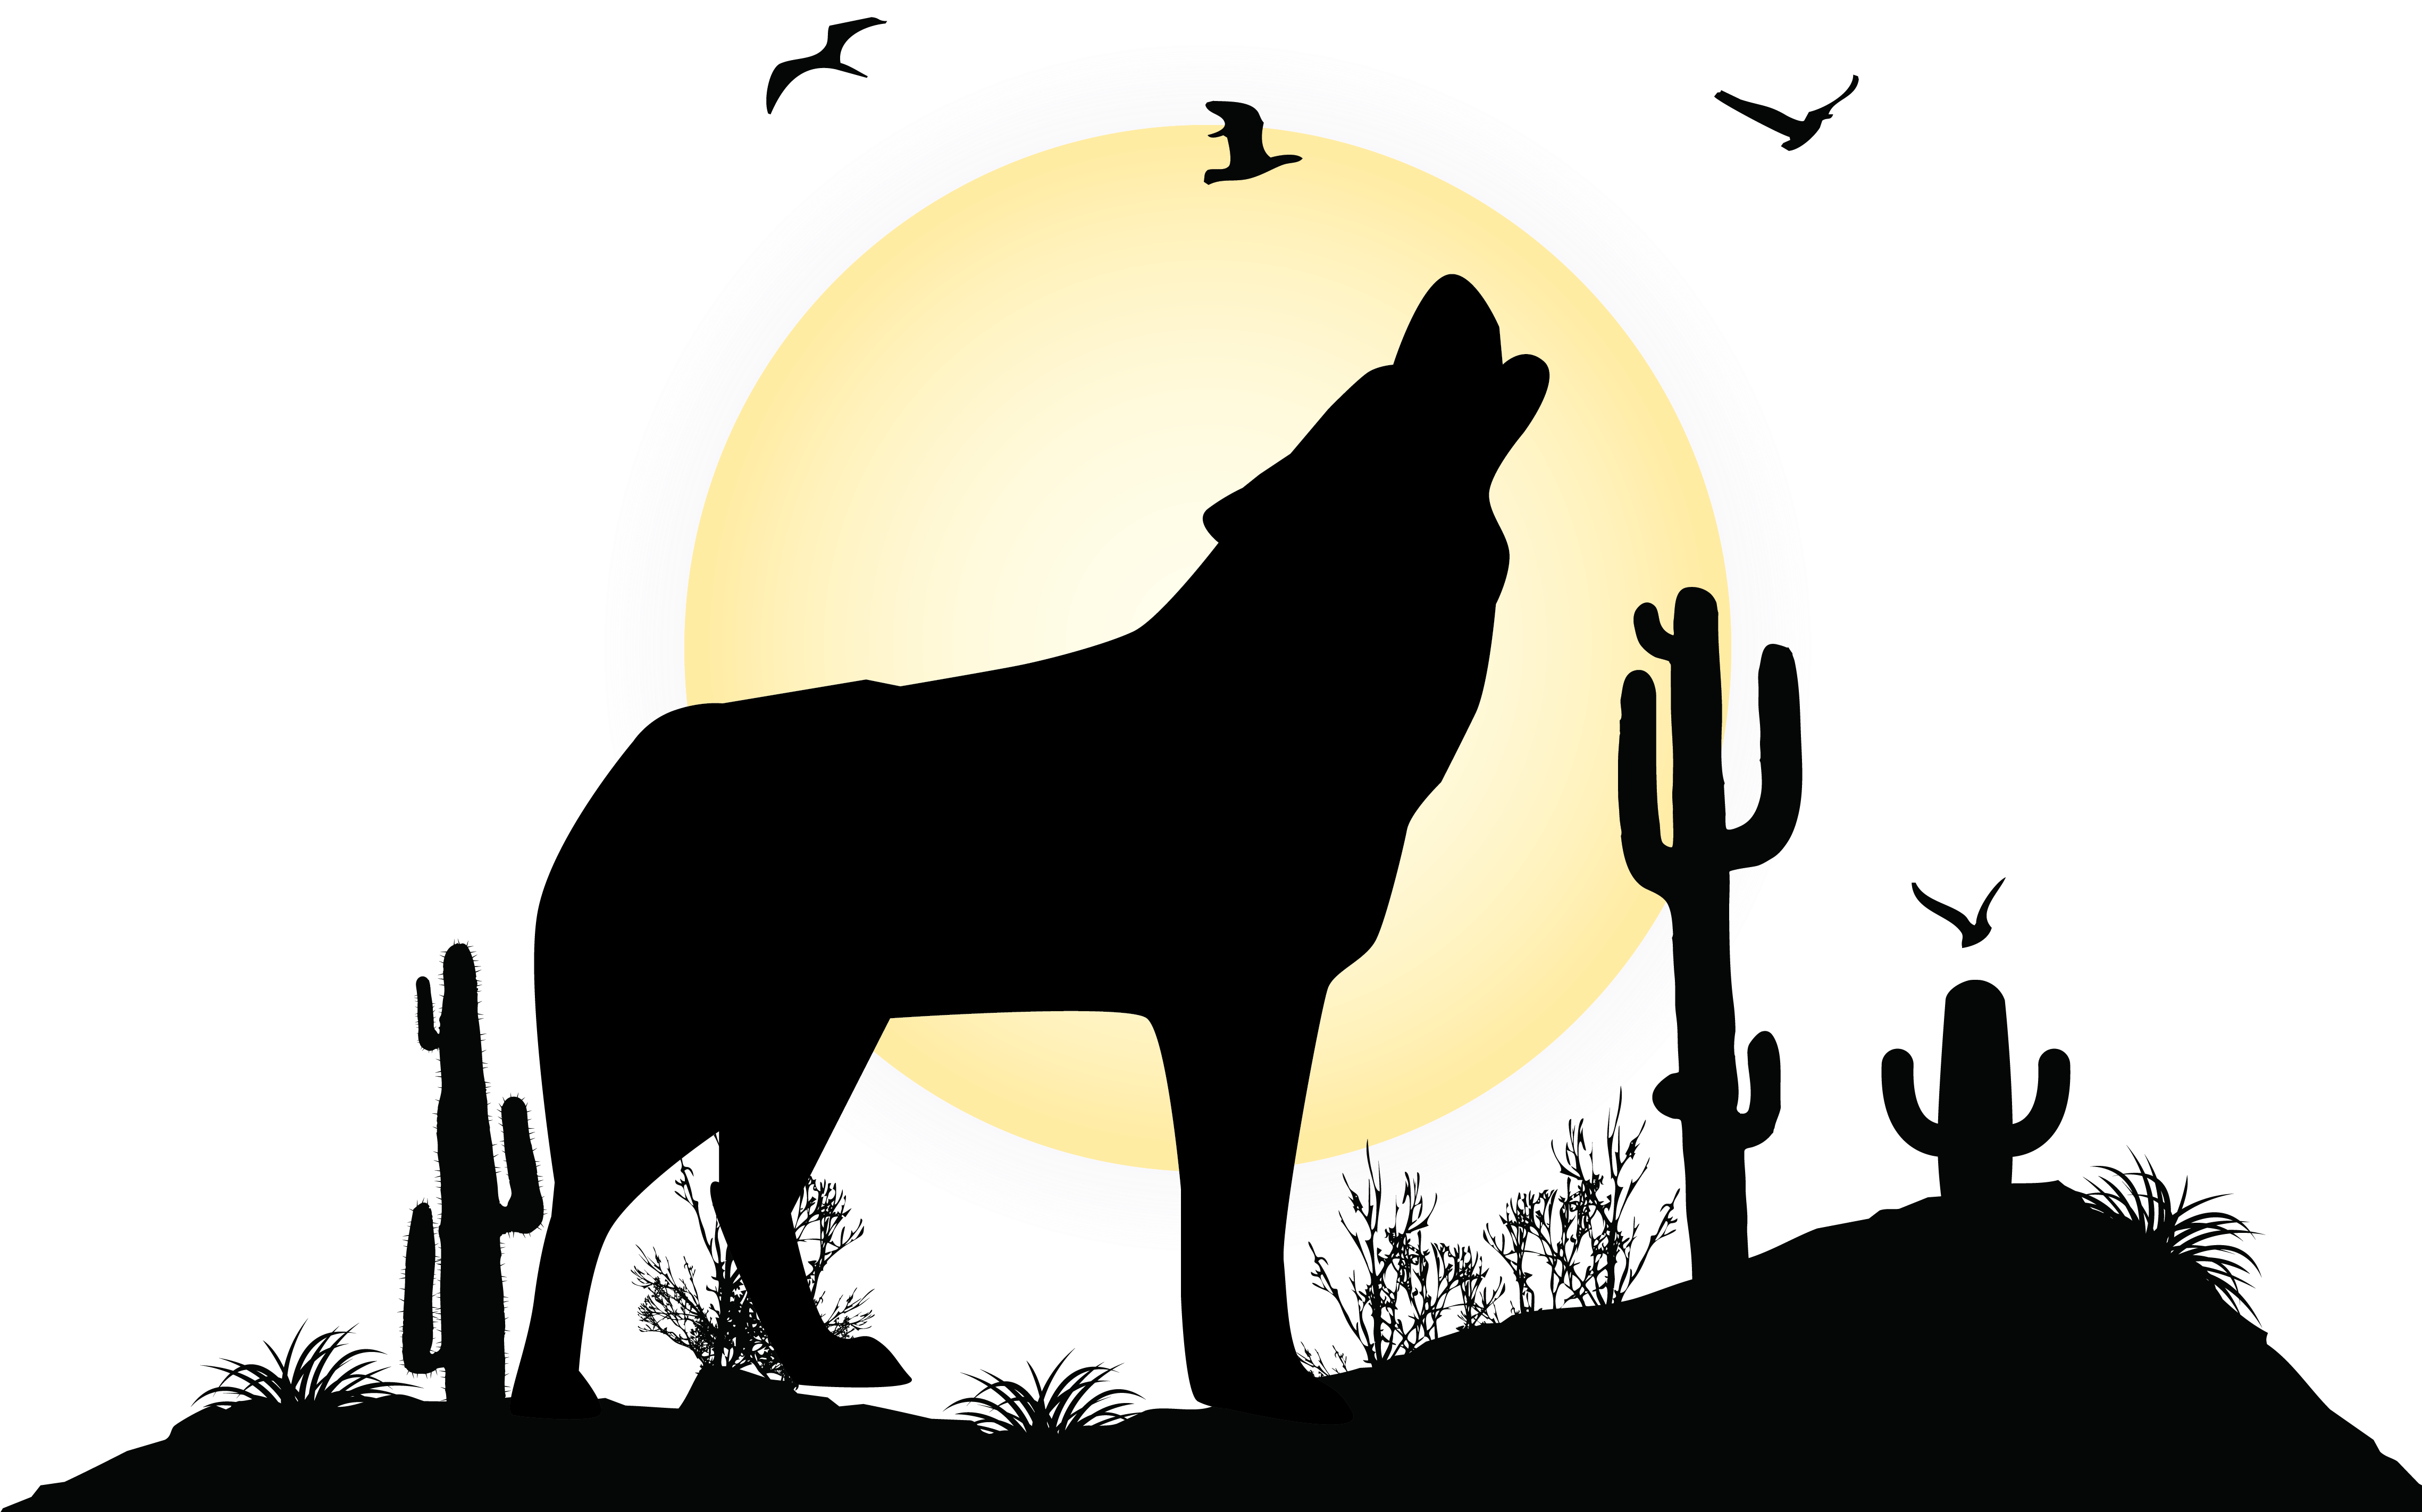 Gray Wolf Landscape Silhouette Illustration - Comfort House Southwest Theme Address Plaque (4554x2884)